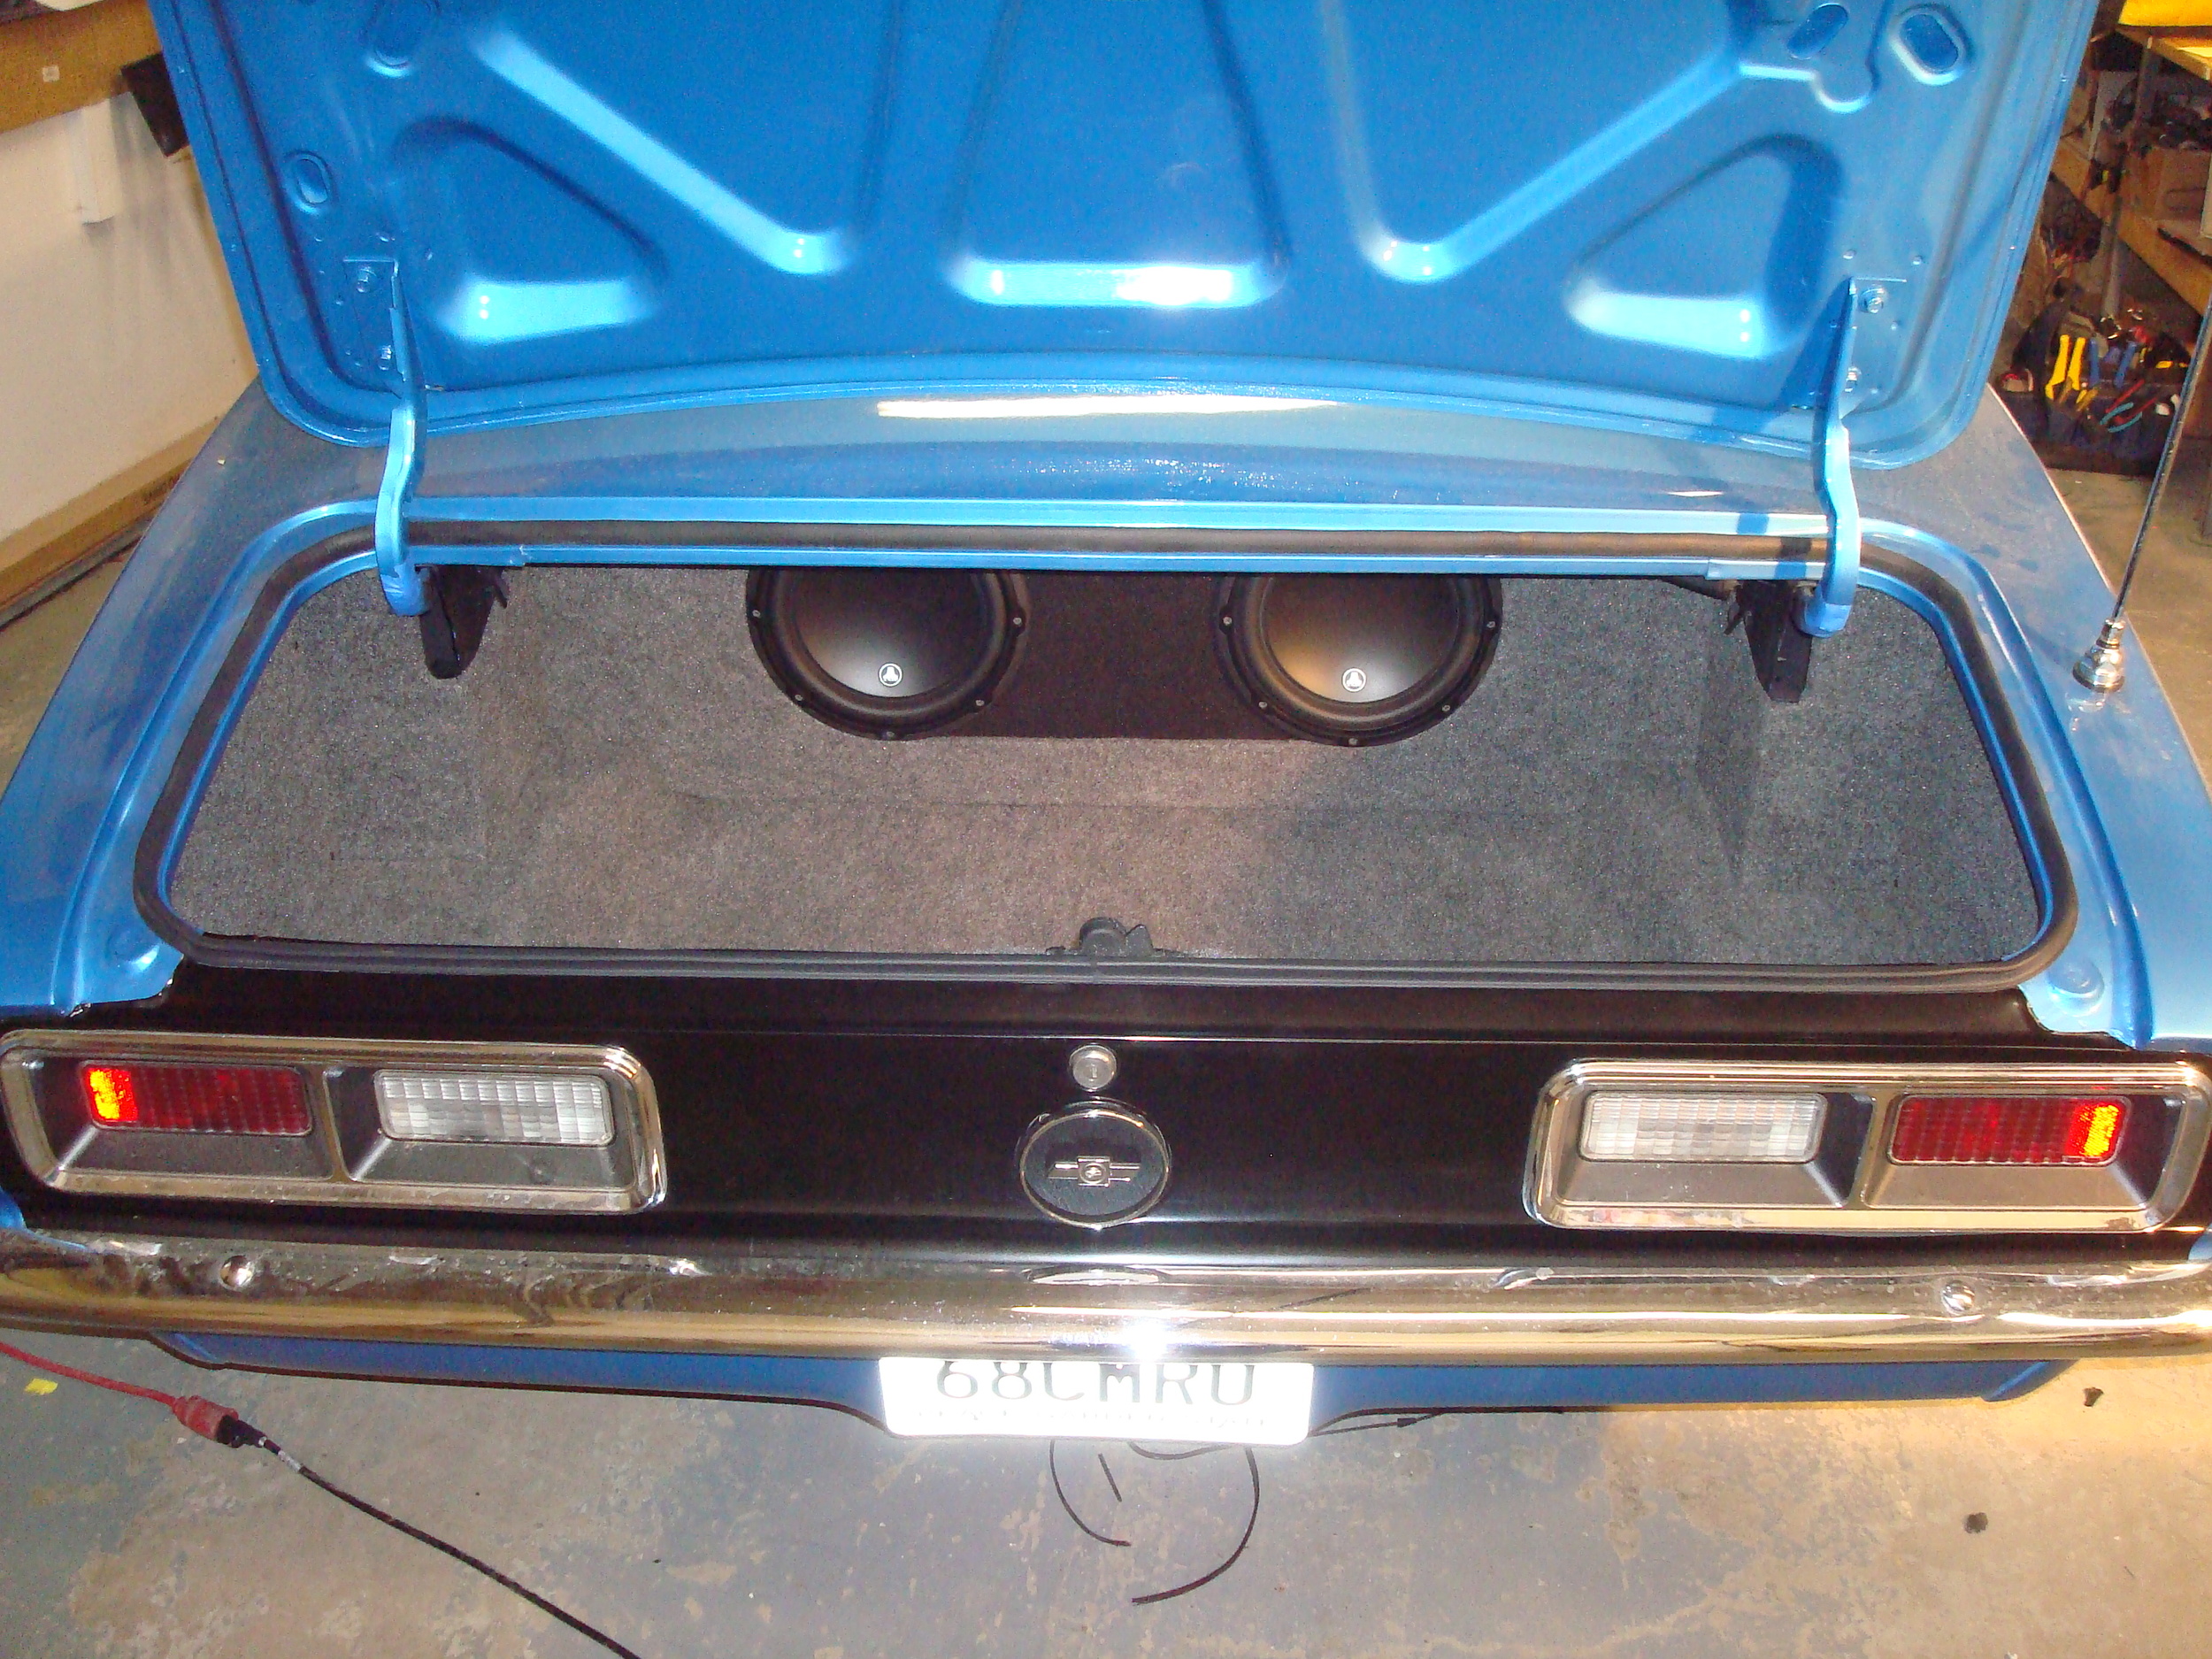 1968 Camaro - Custom Subwoofer Enclosure for (2) JL Audio 10W3v3 Subwoofers & Trunk Finishing